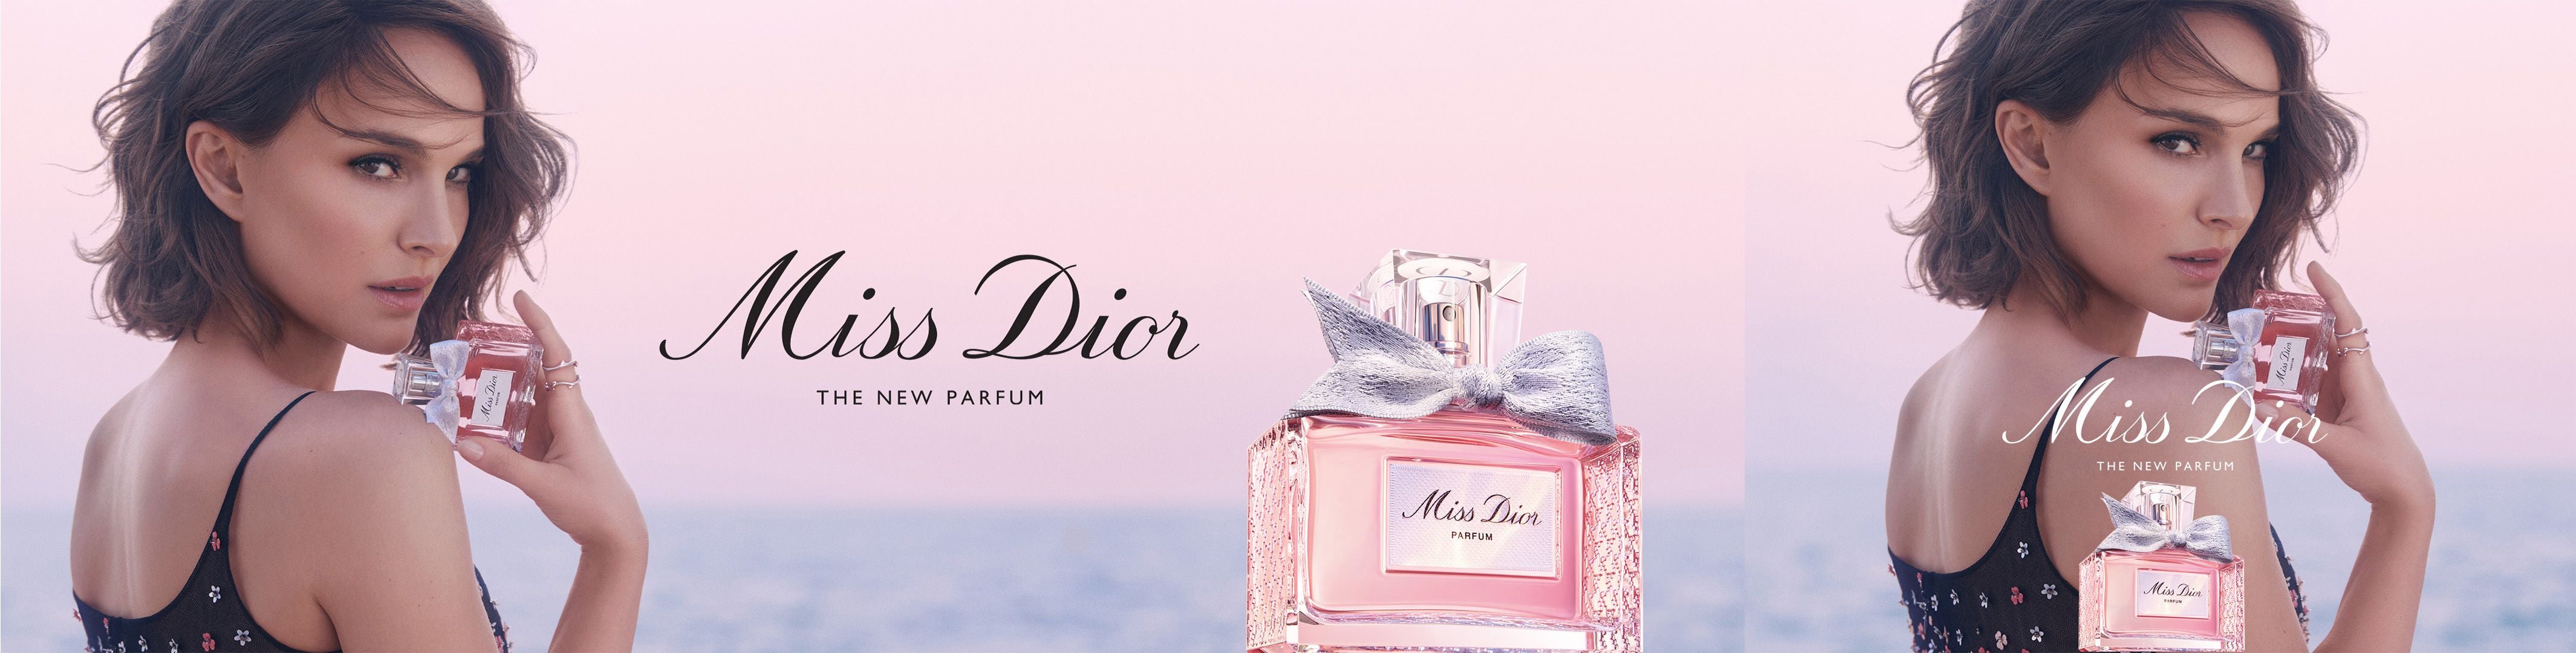 Dior Women's Fragrance